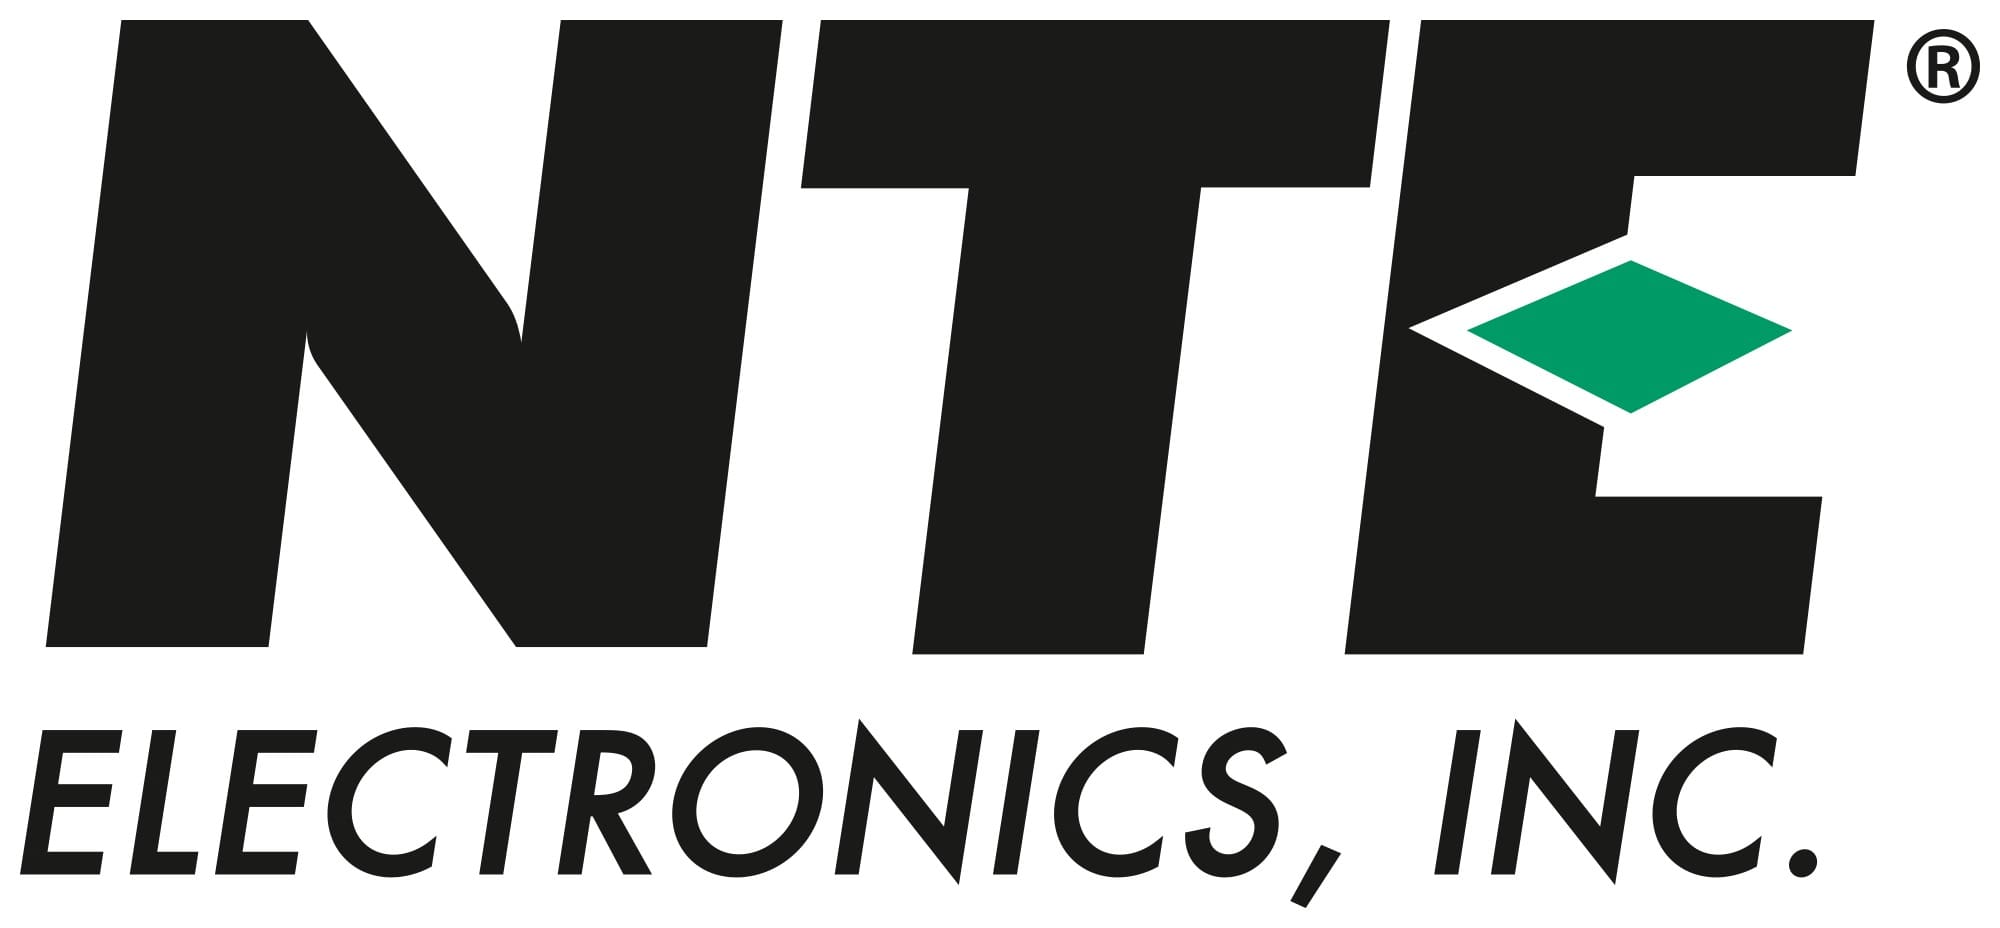 nte electronics logo